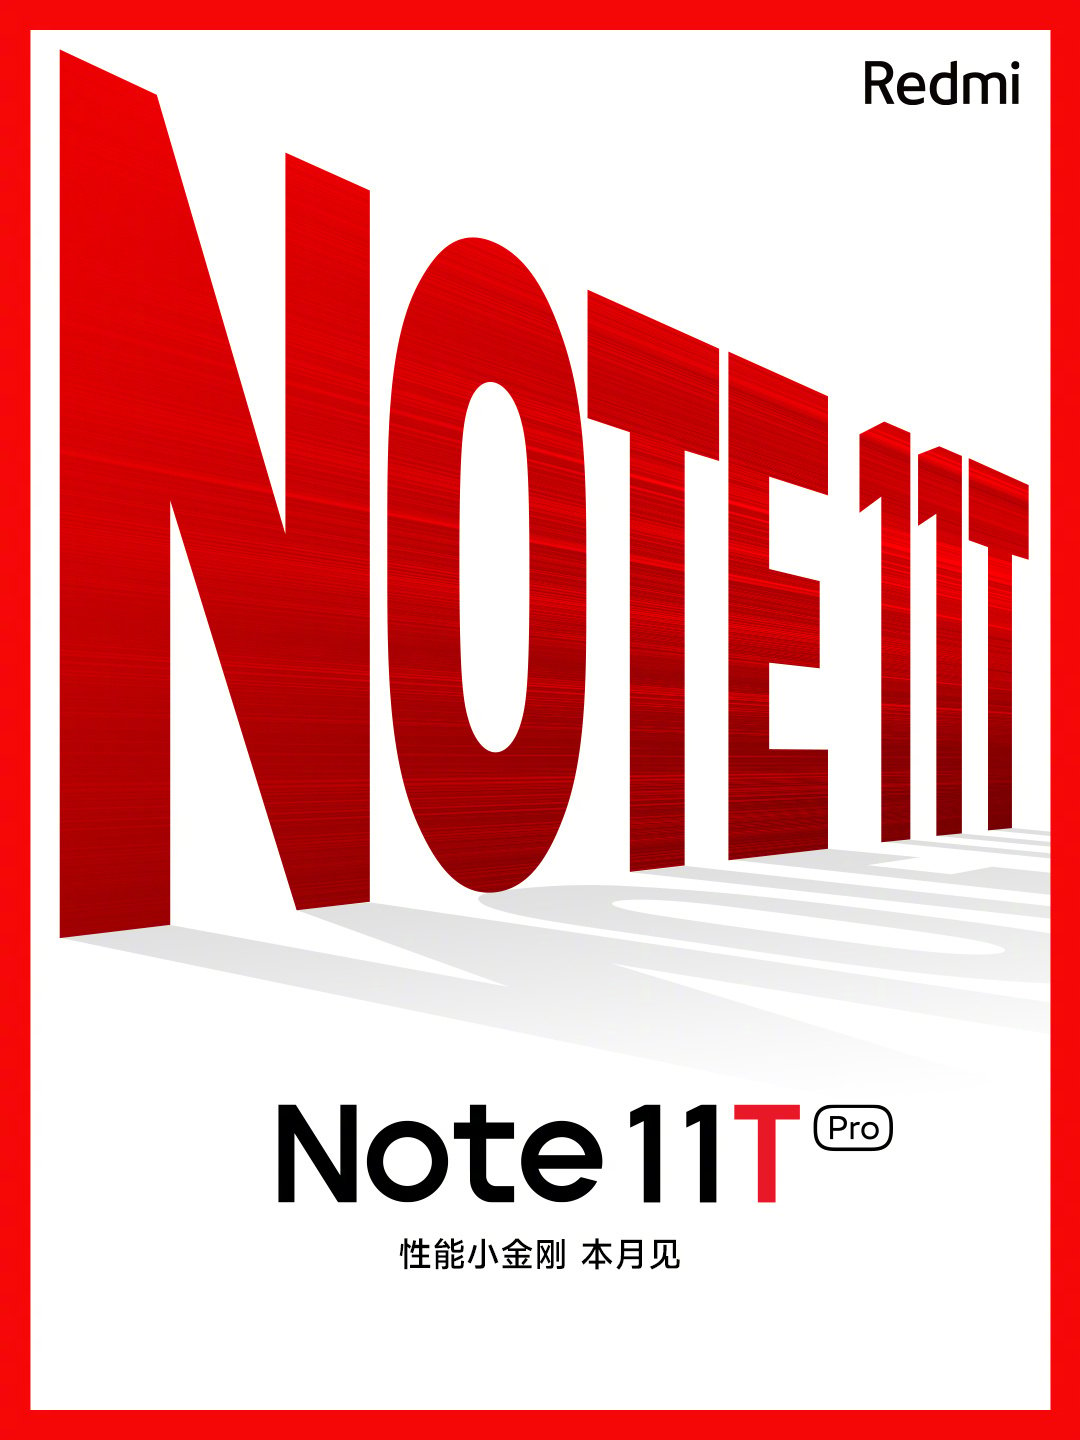 Redmi Note 11T series